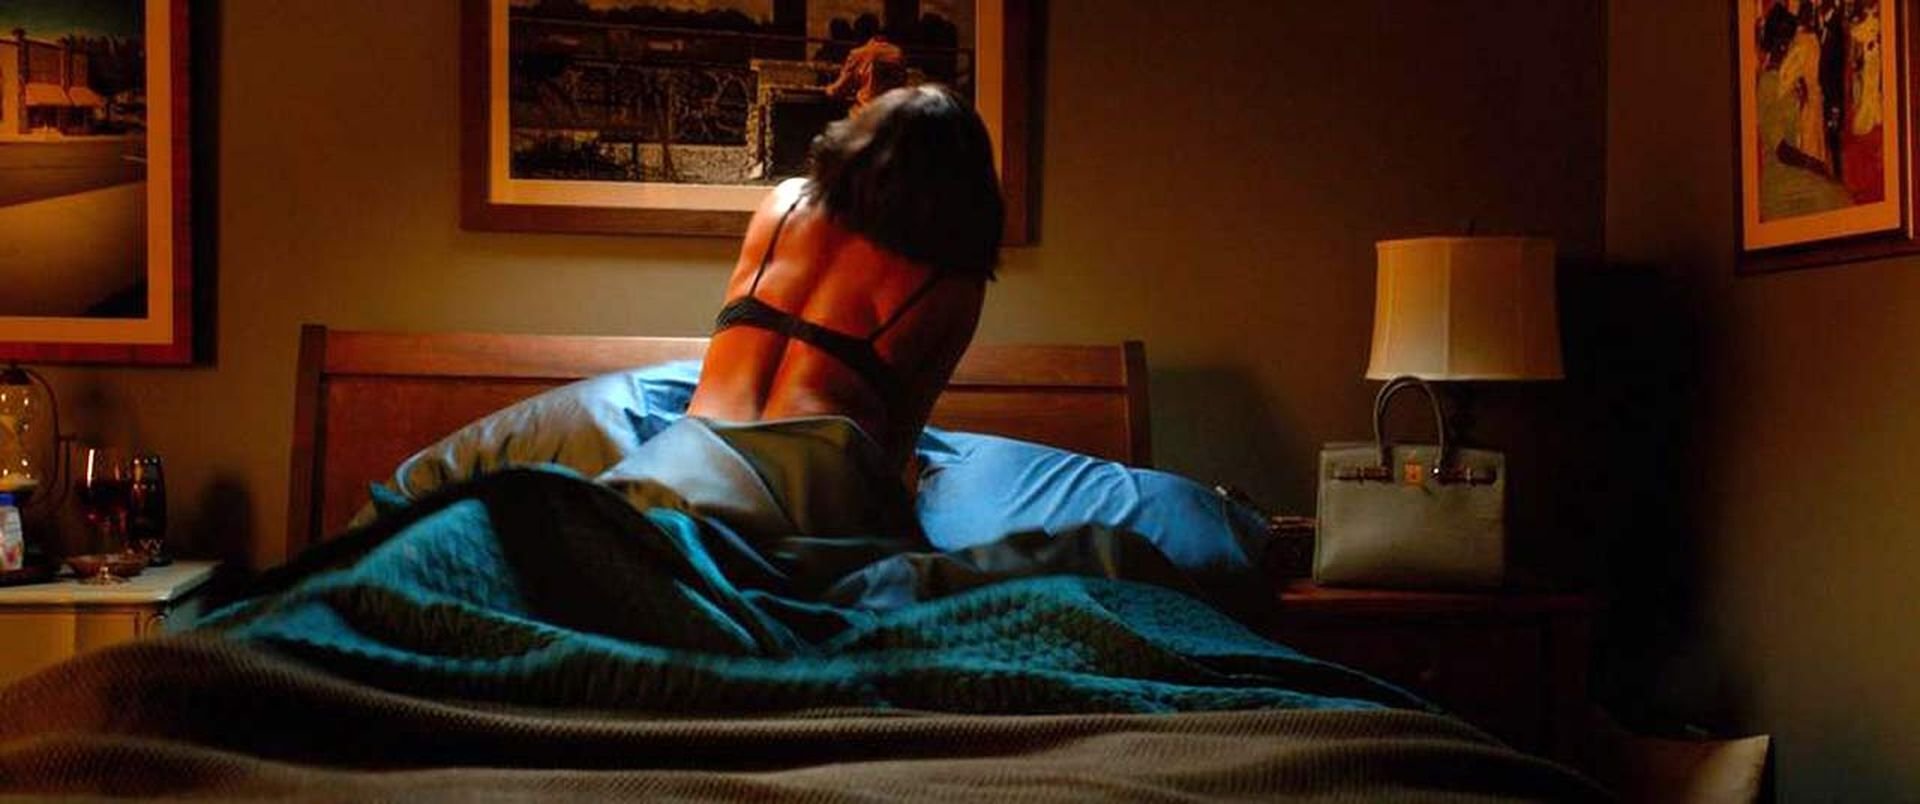 Taraji P Henson Nude What Men Want 8 Pics S And Video